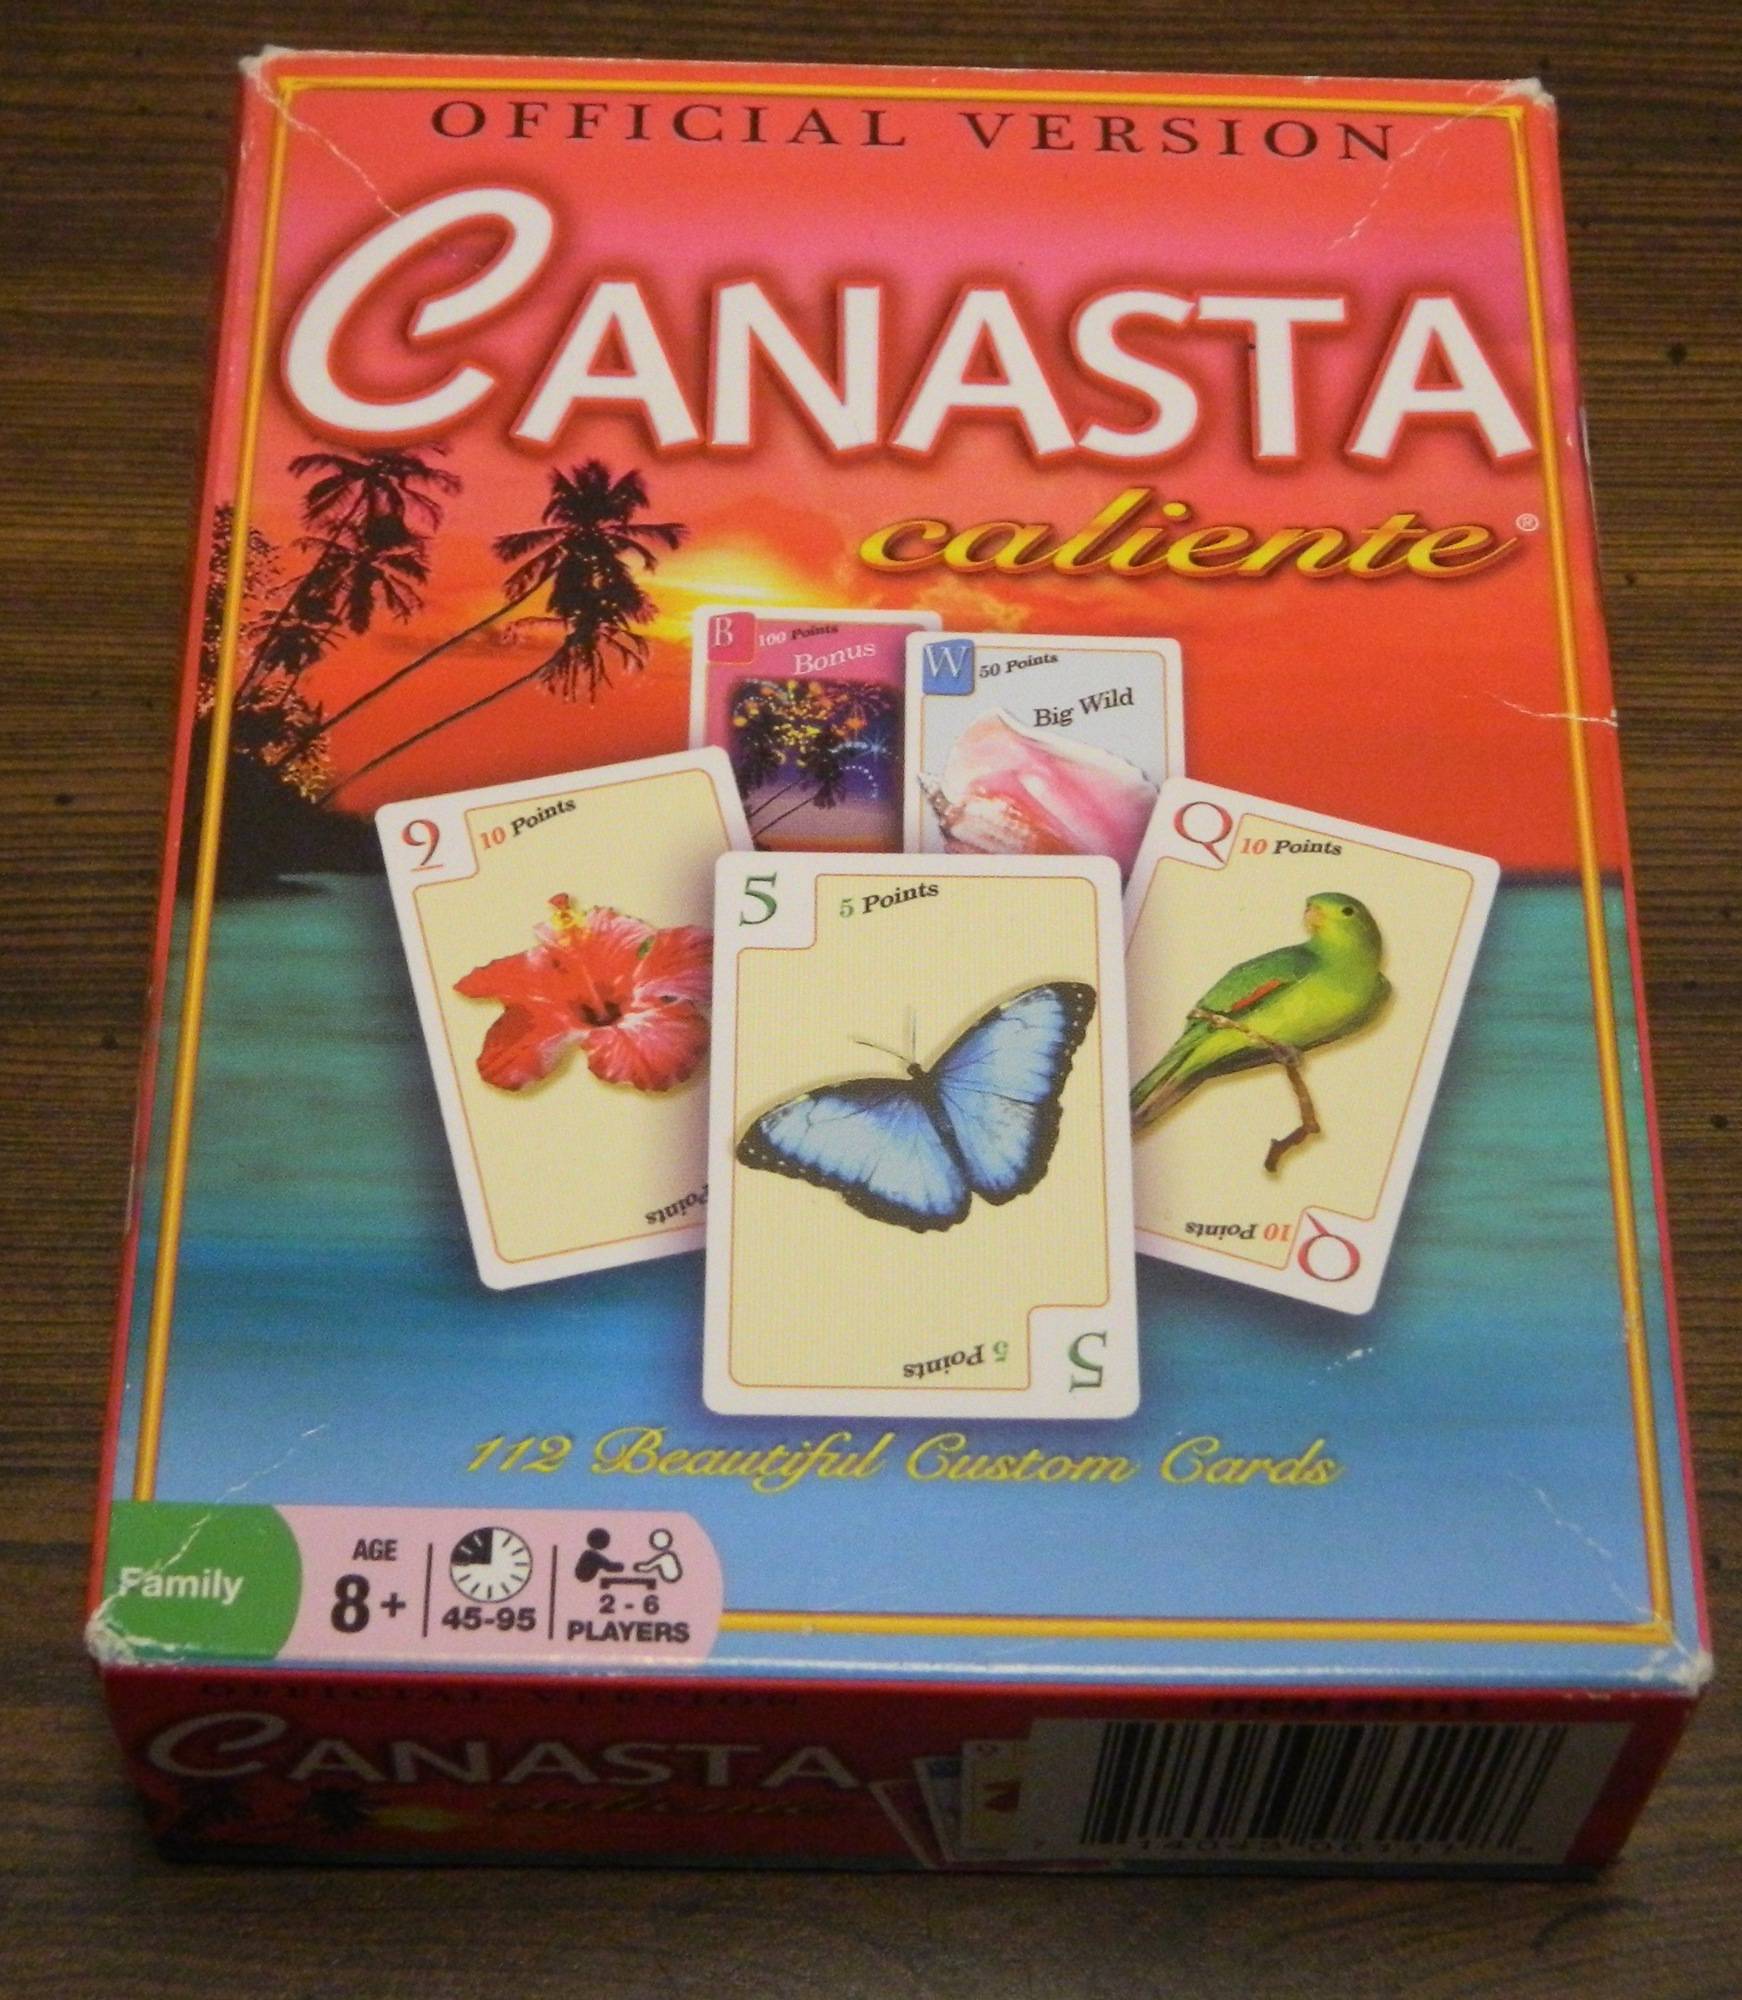 Box of Canasta Caliente